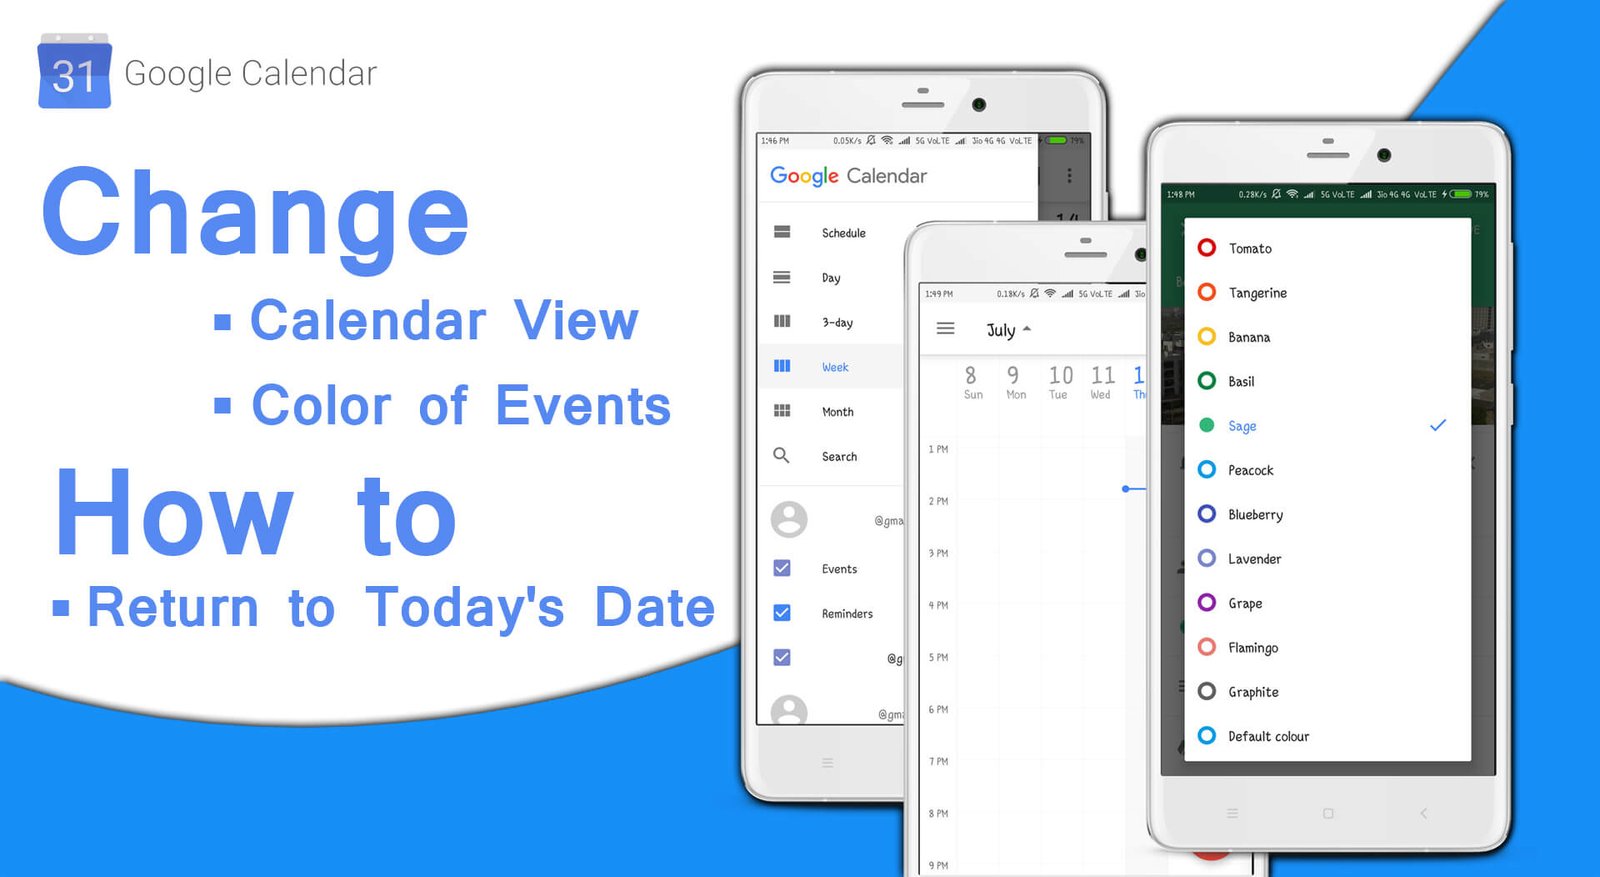 Change your Google Calendar View